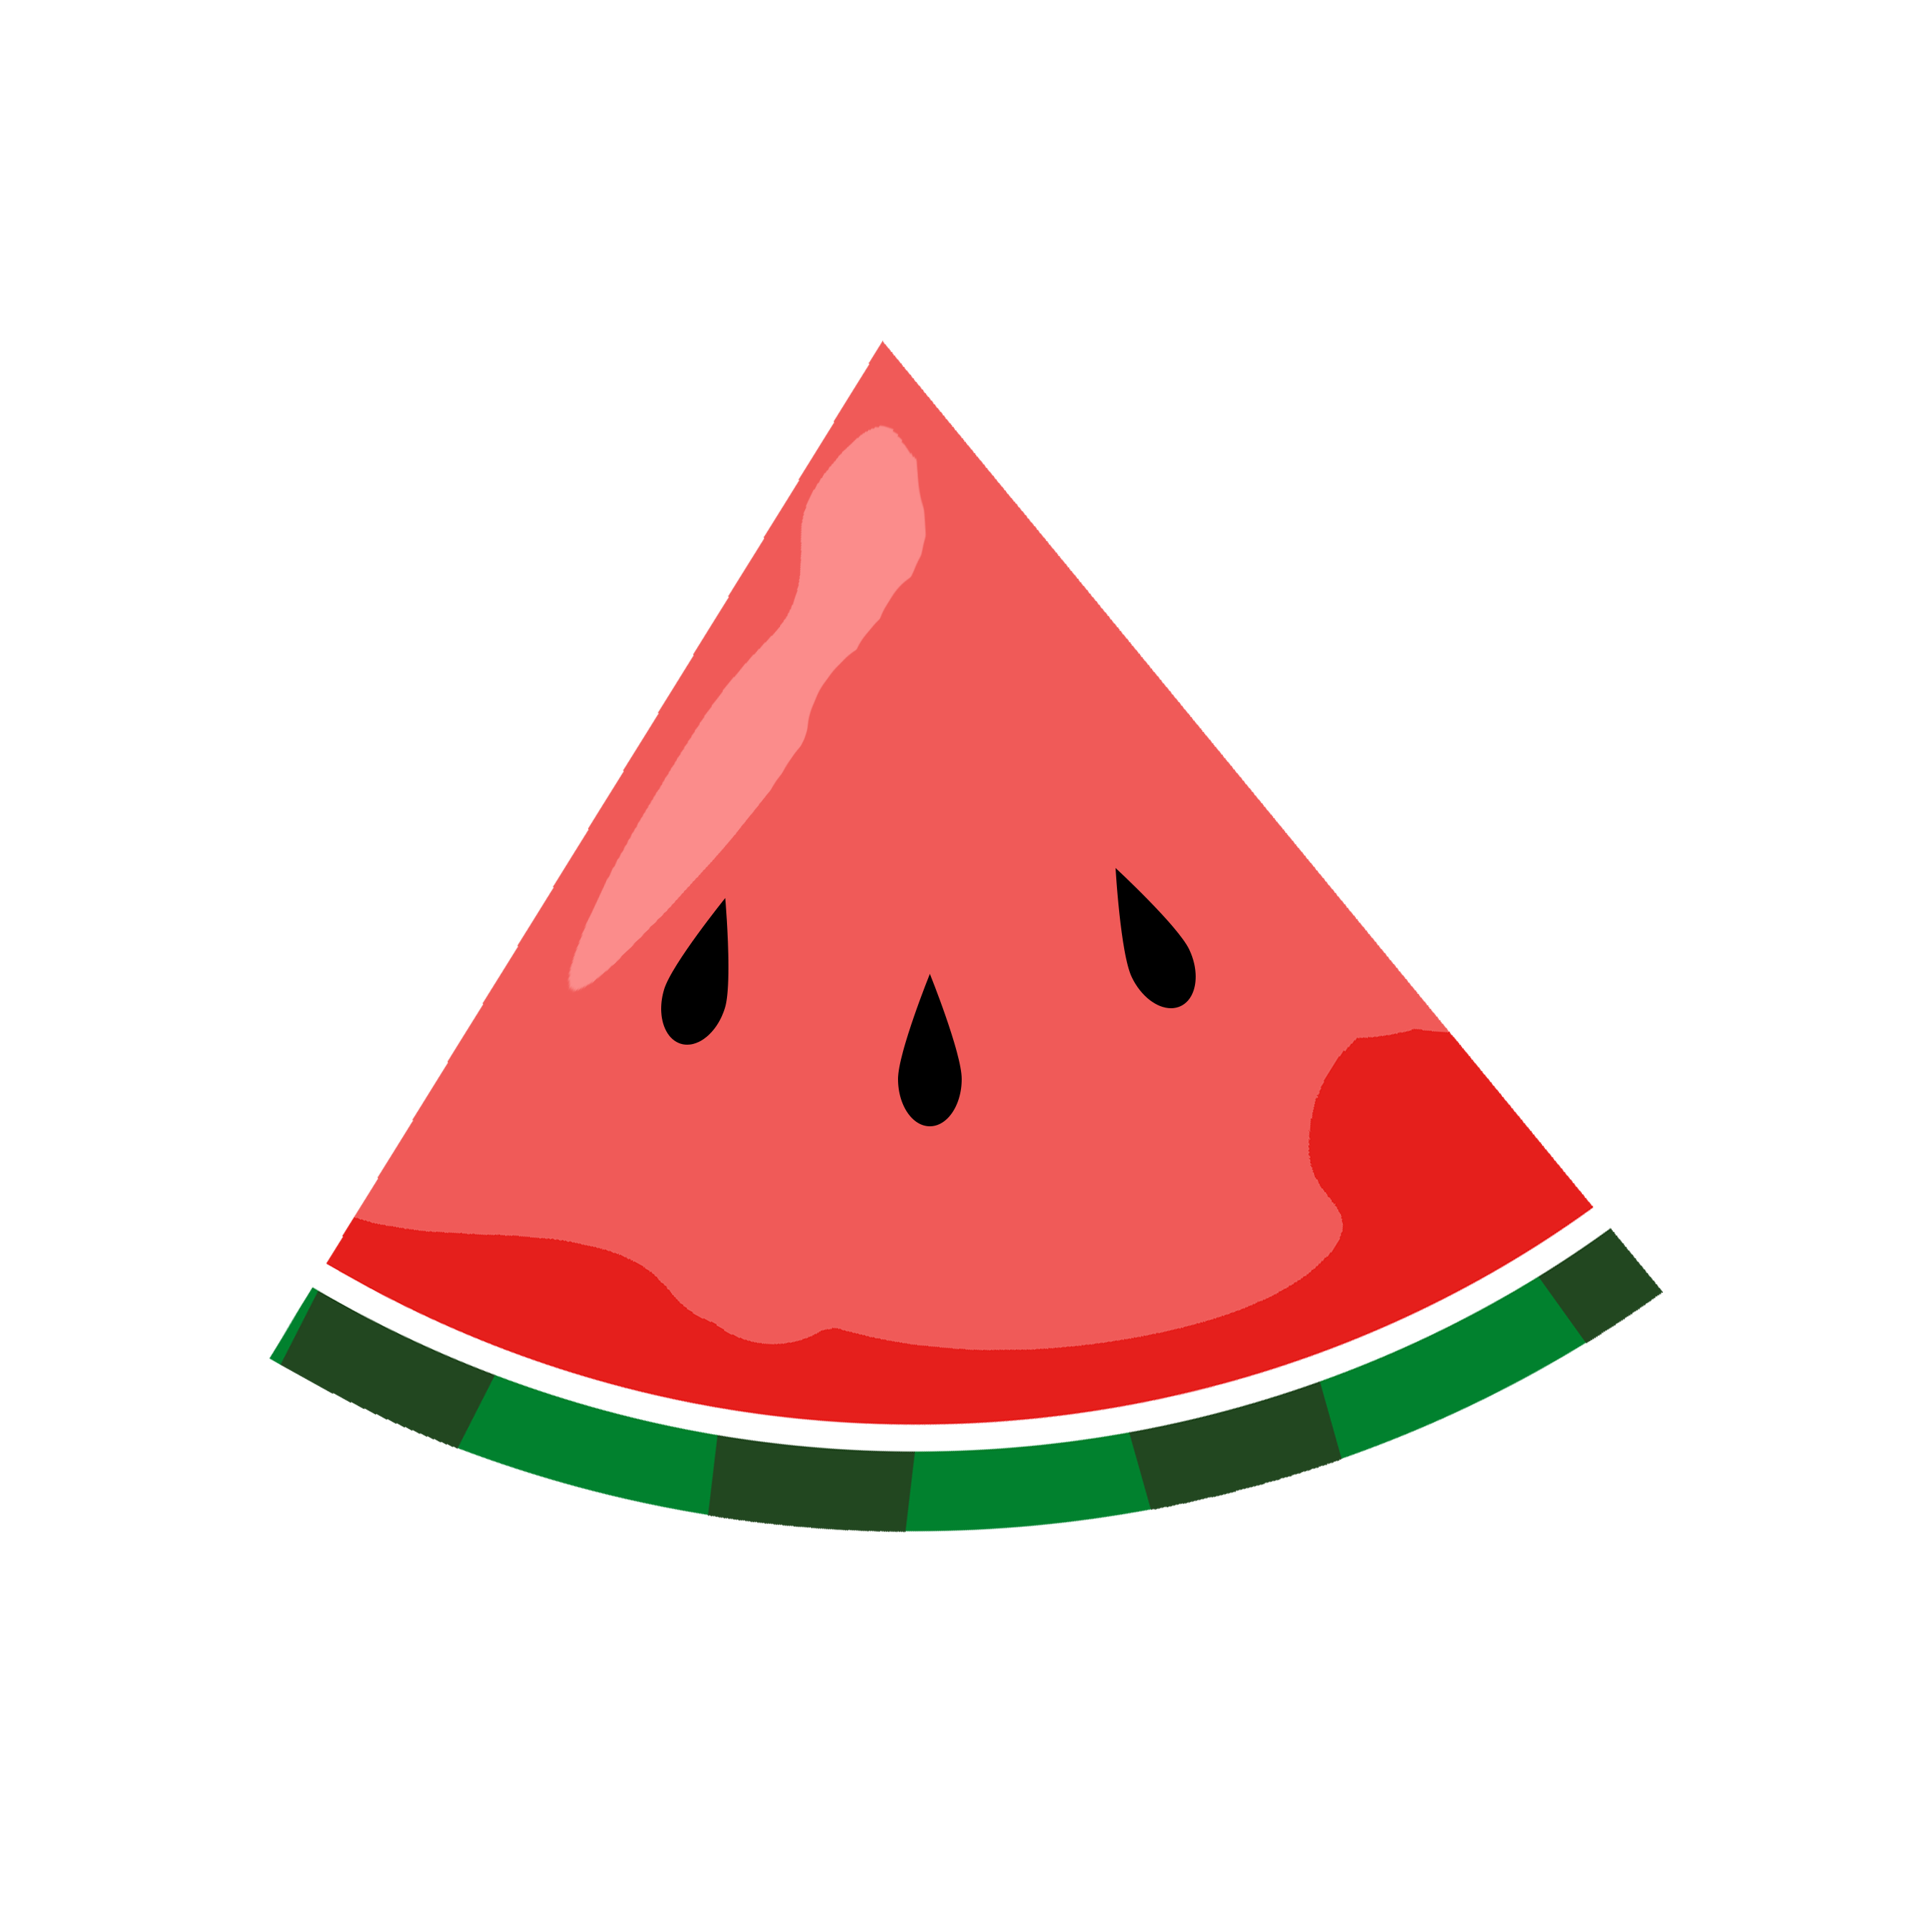 Free watermelon image.